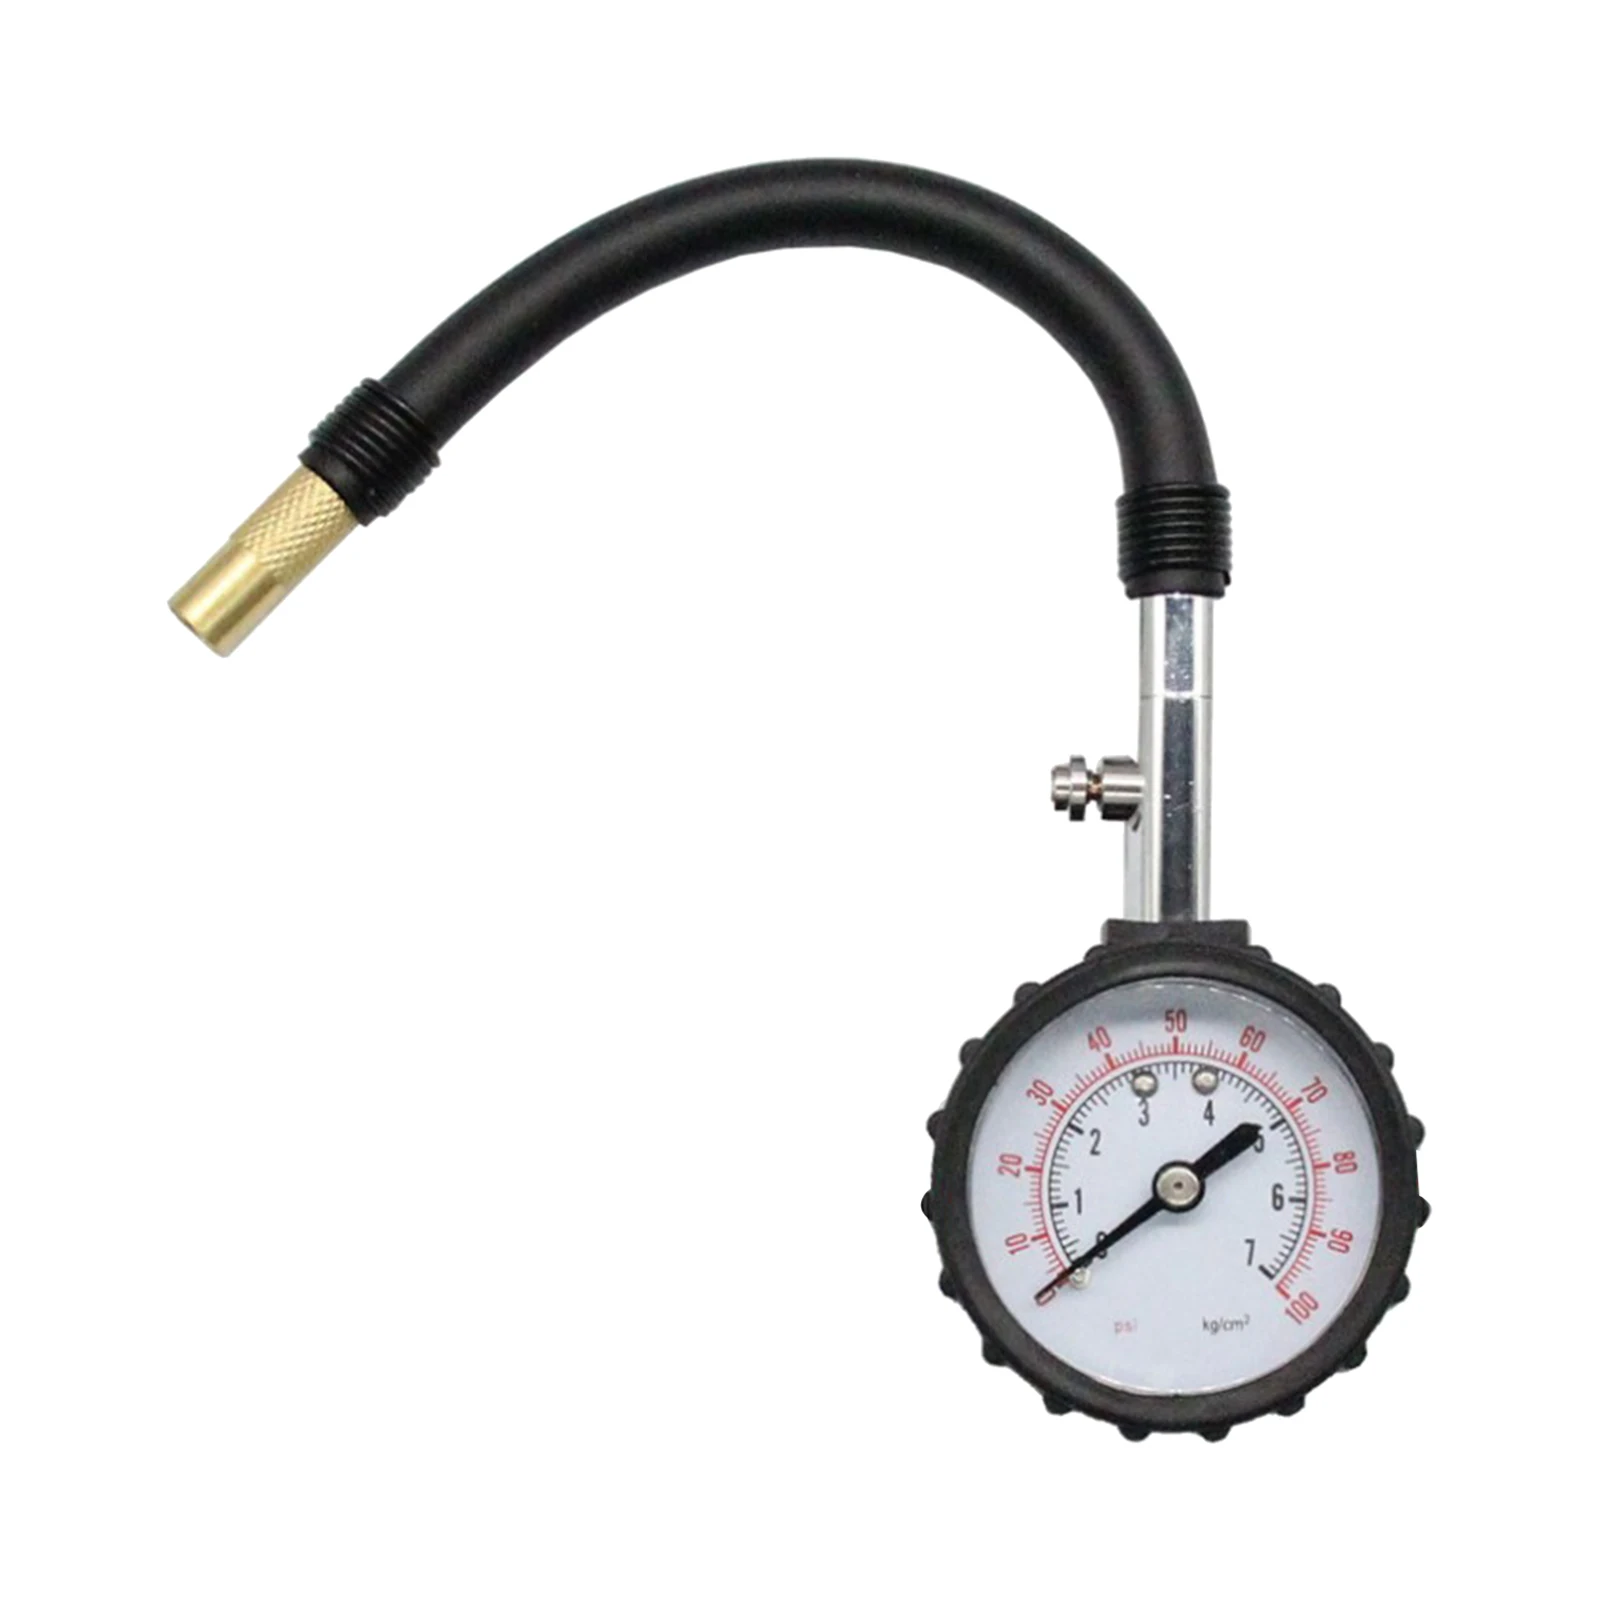 Portable Accurate 0-100 Psi Car Auto Motor Mechanical Tire Pressure Gauge Air Meter Tester